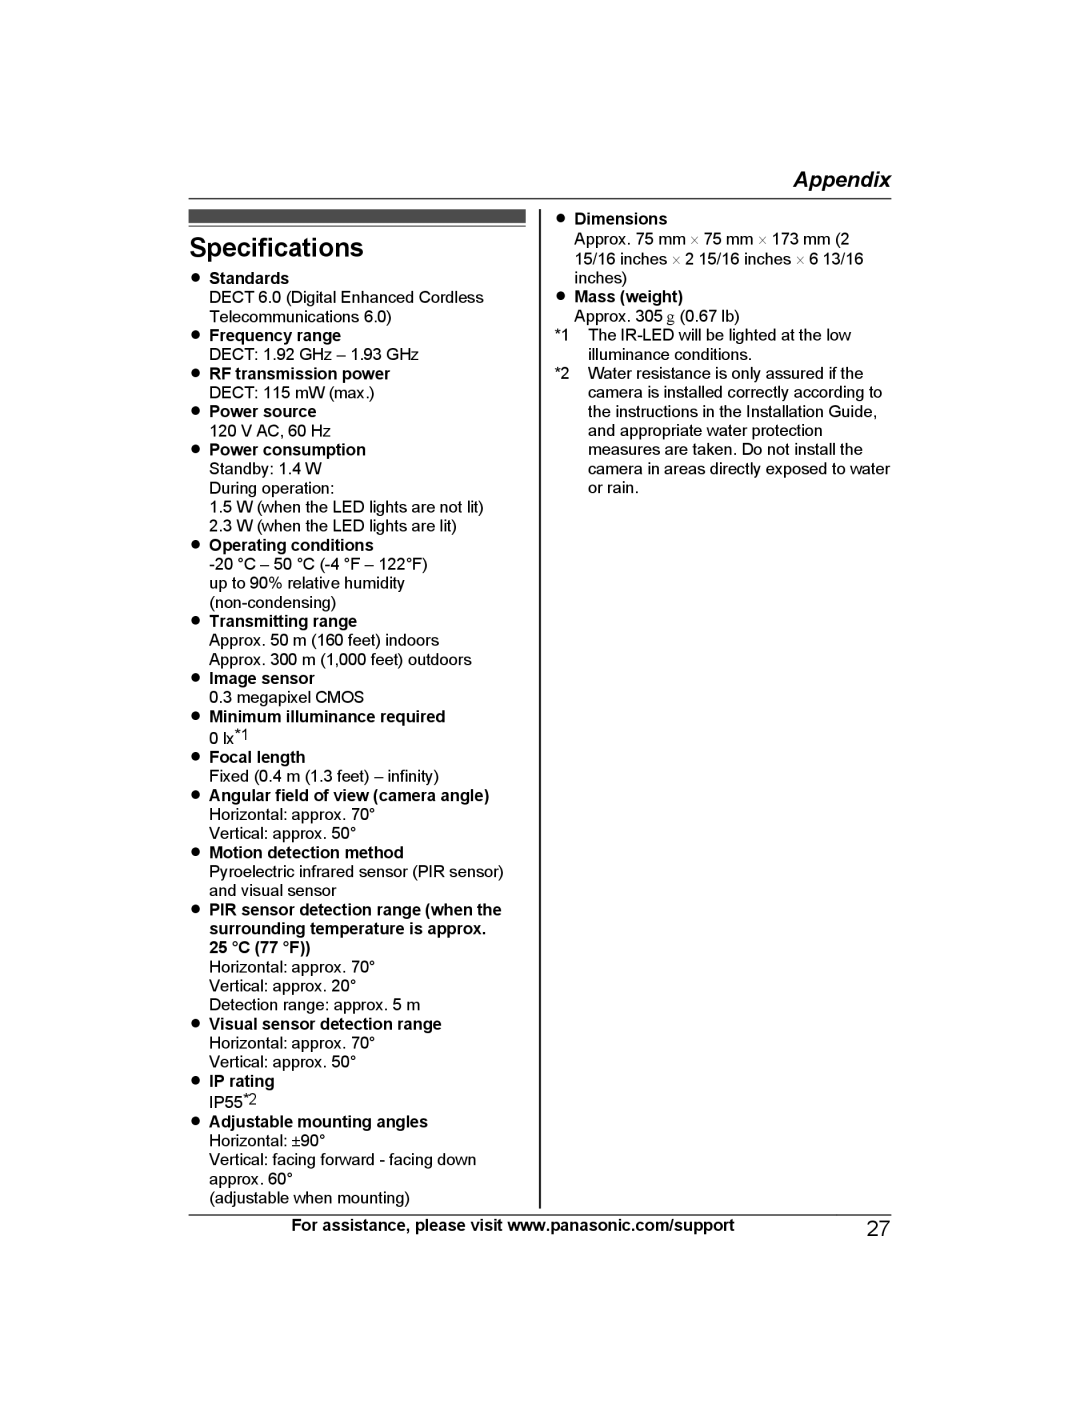 Panasonic KX-HNC600 manual Specifications, Appendix 